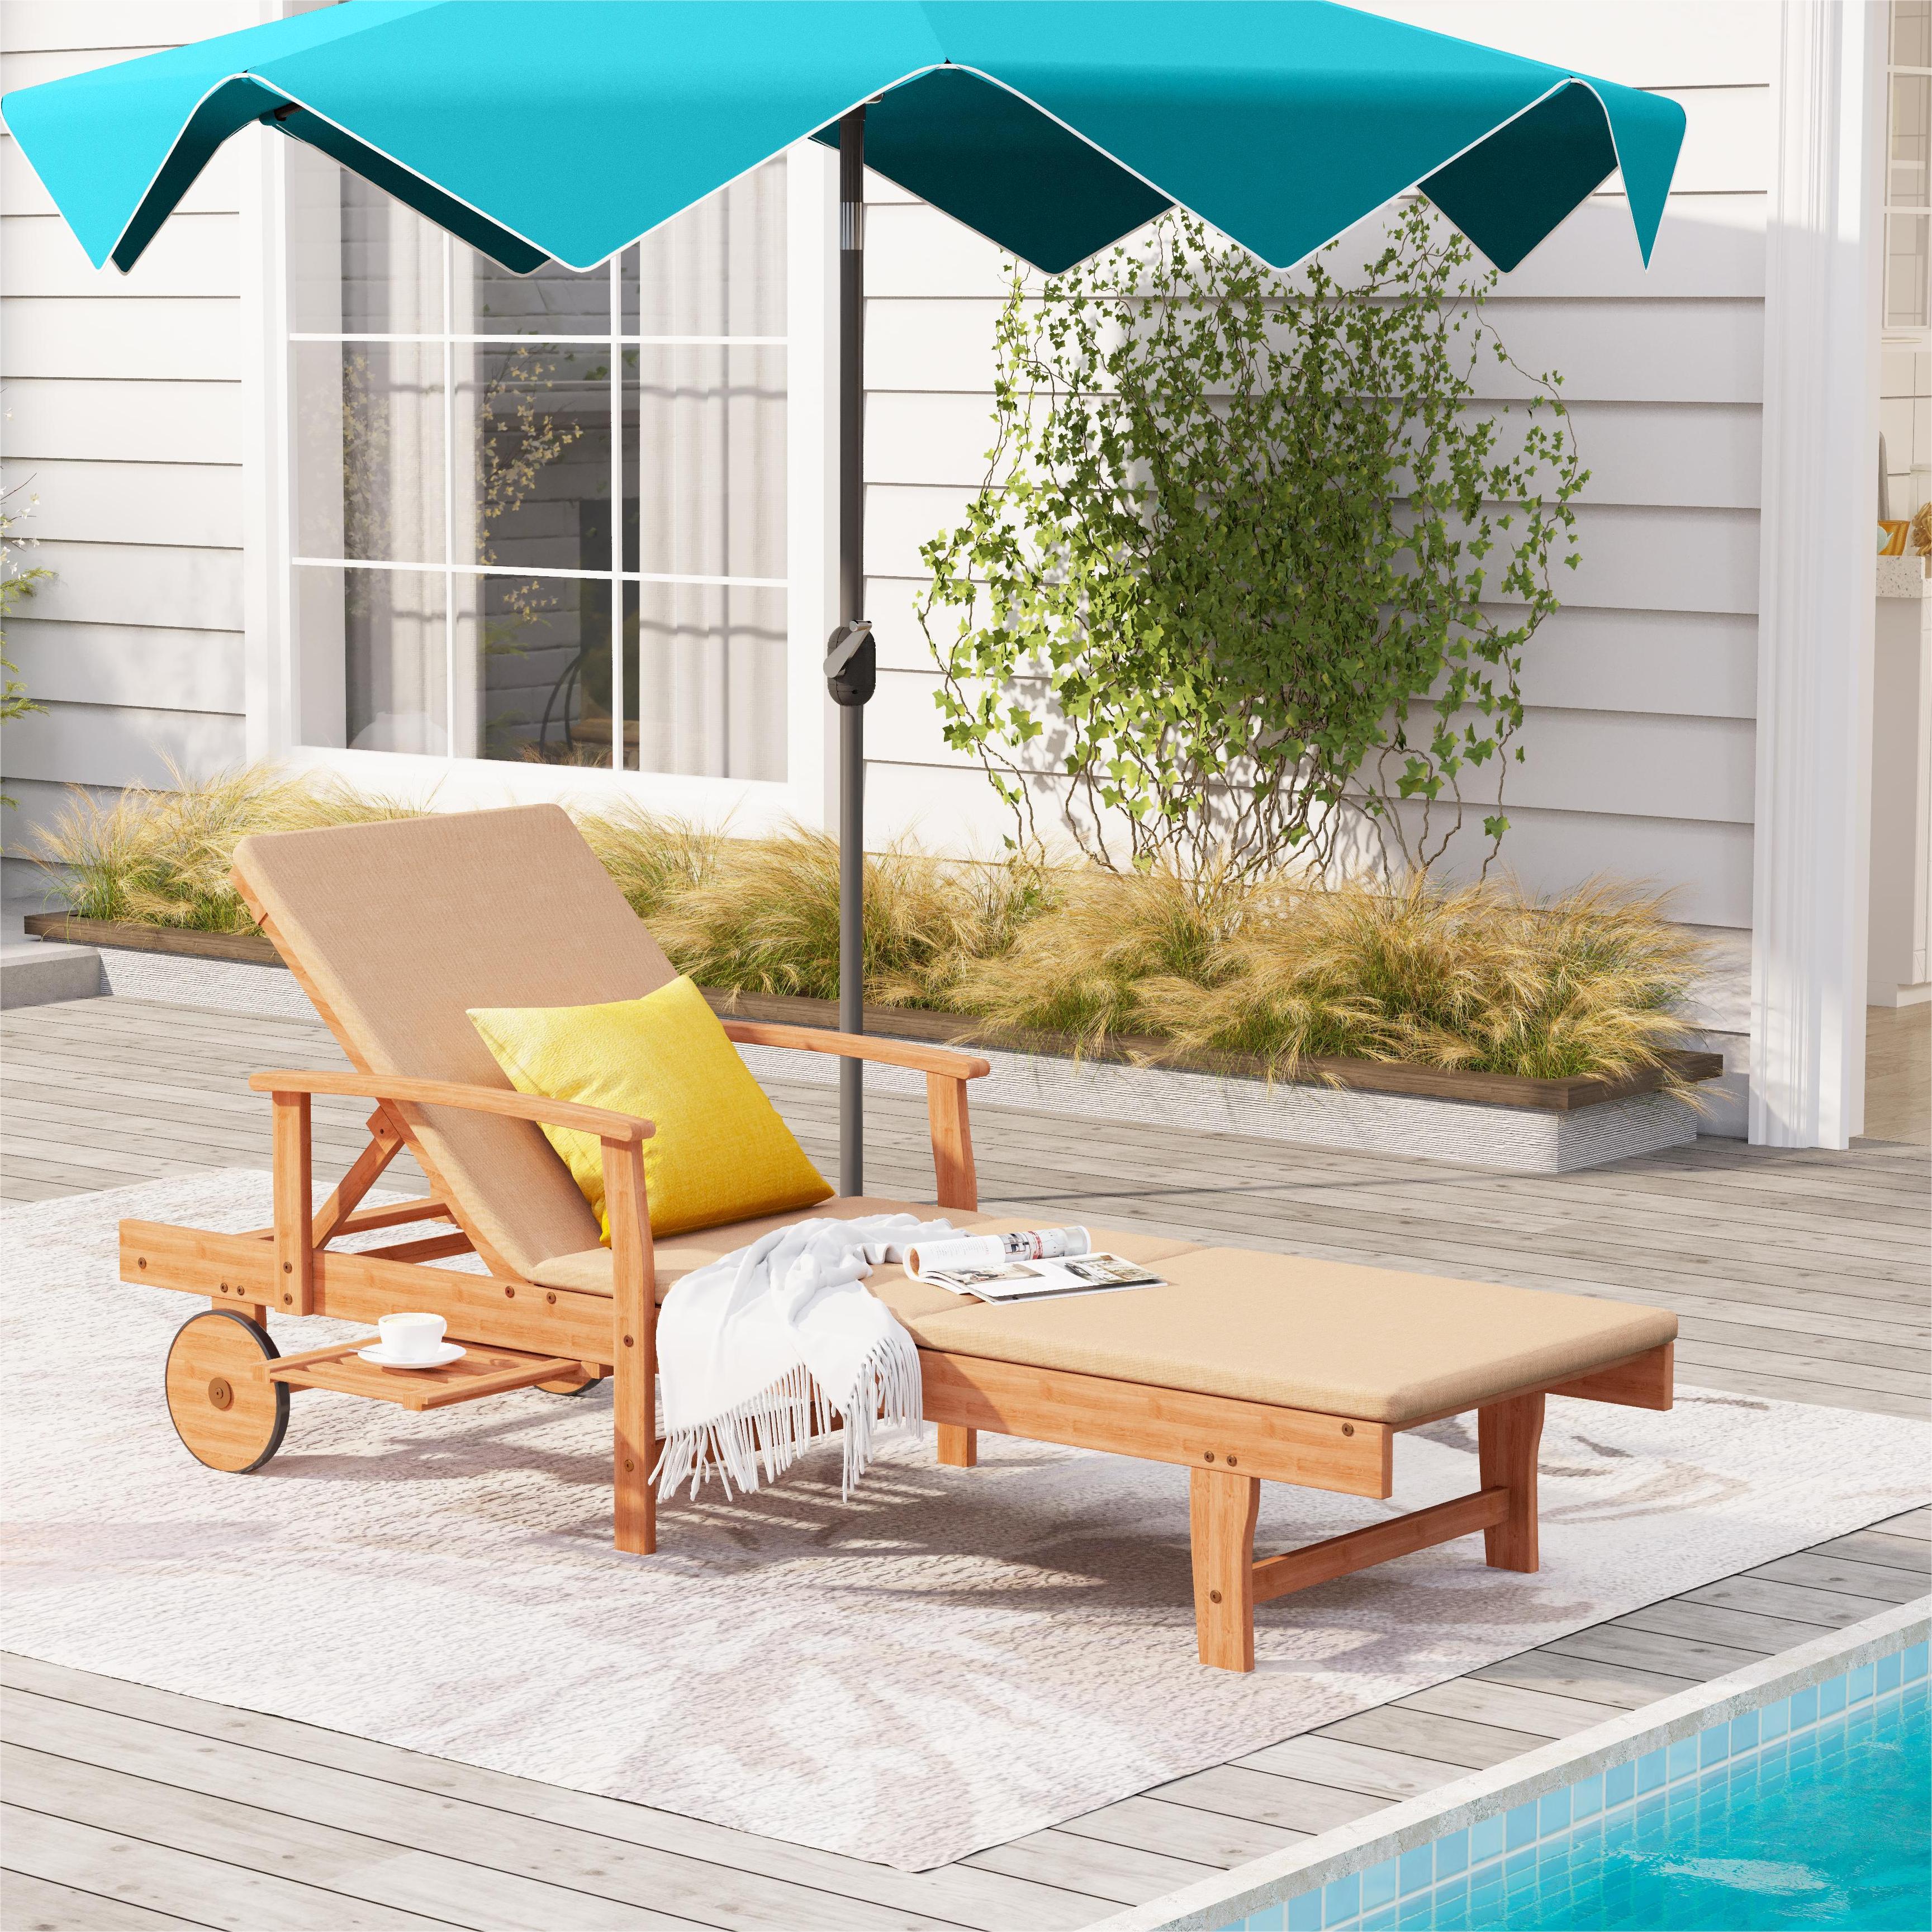 PHI VILLA Portable Folding Acacia Wood Adjustable Lounge Chair with cushions for Pool, Beach and Backyard